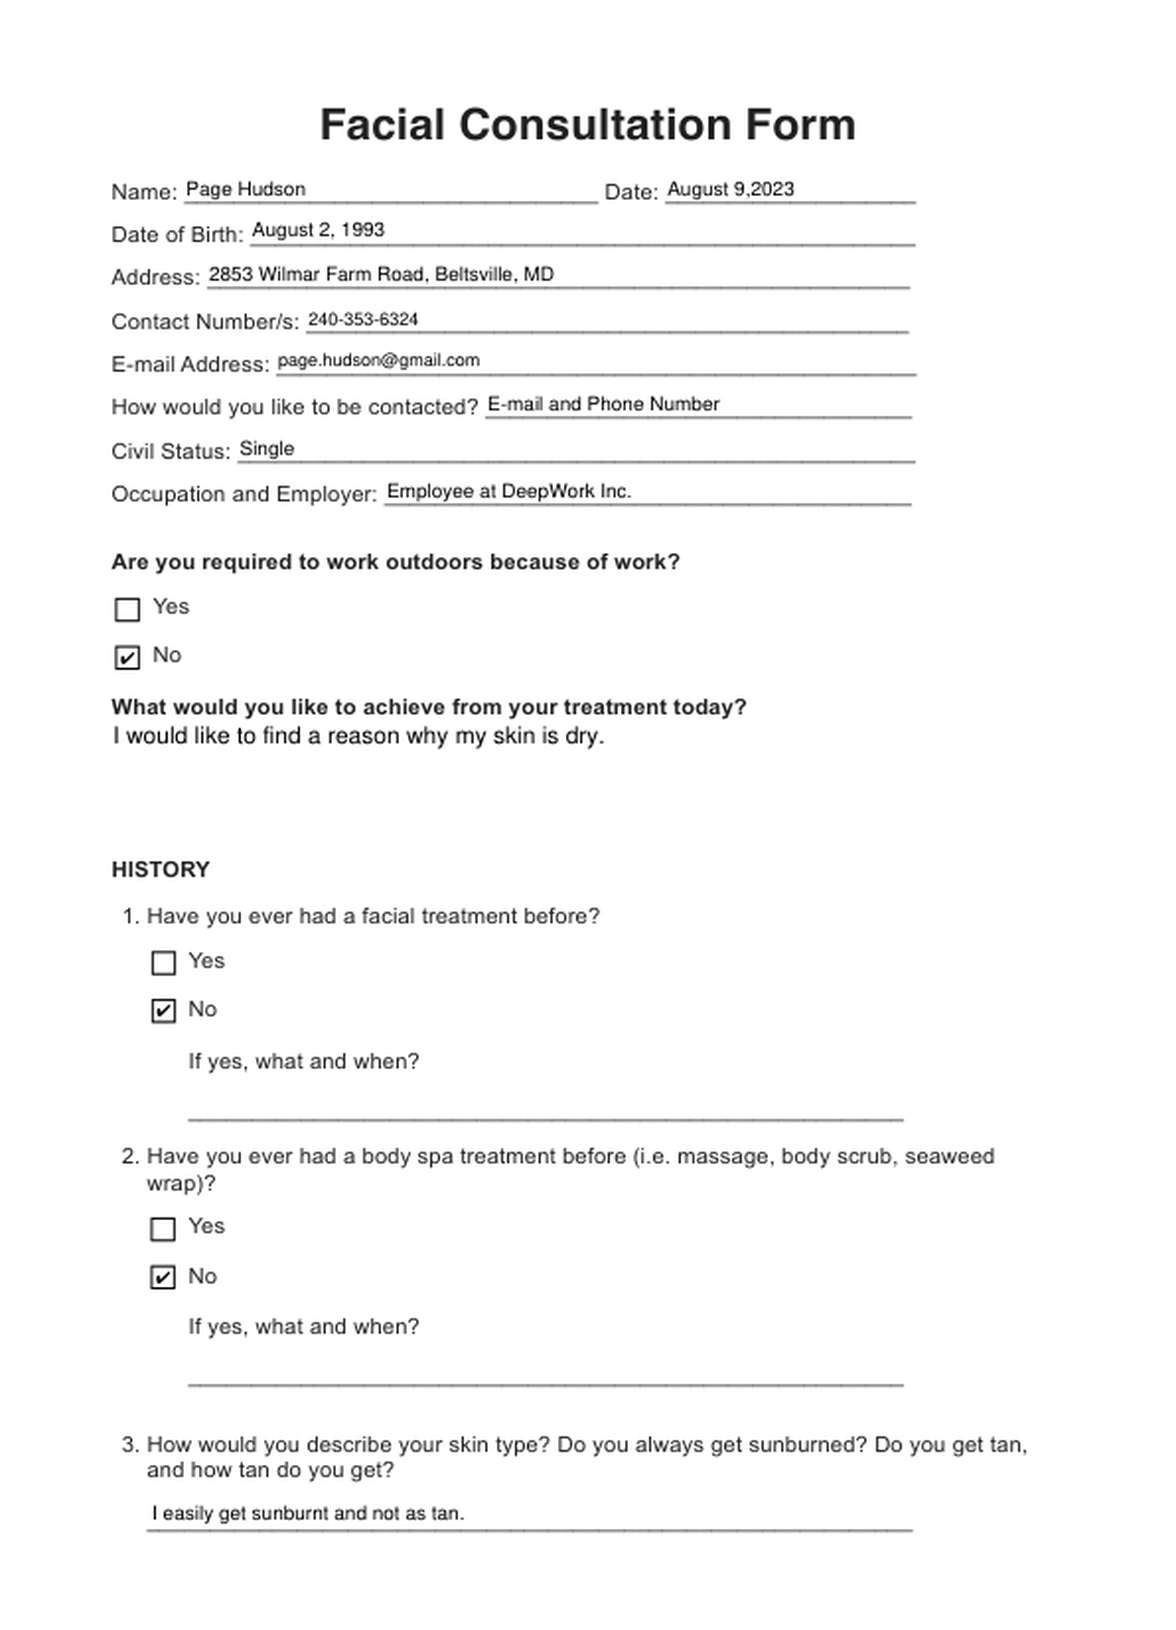 Facial Consultation Forms PDF Example